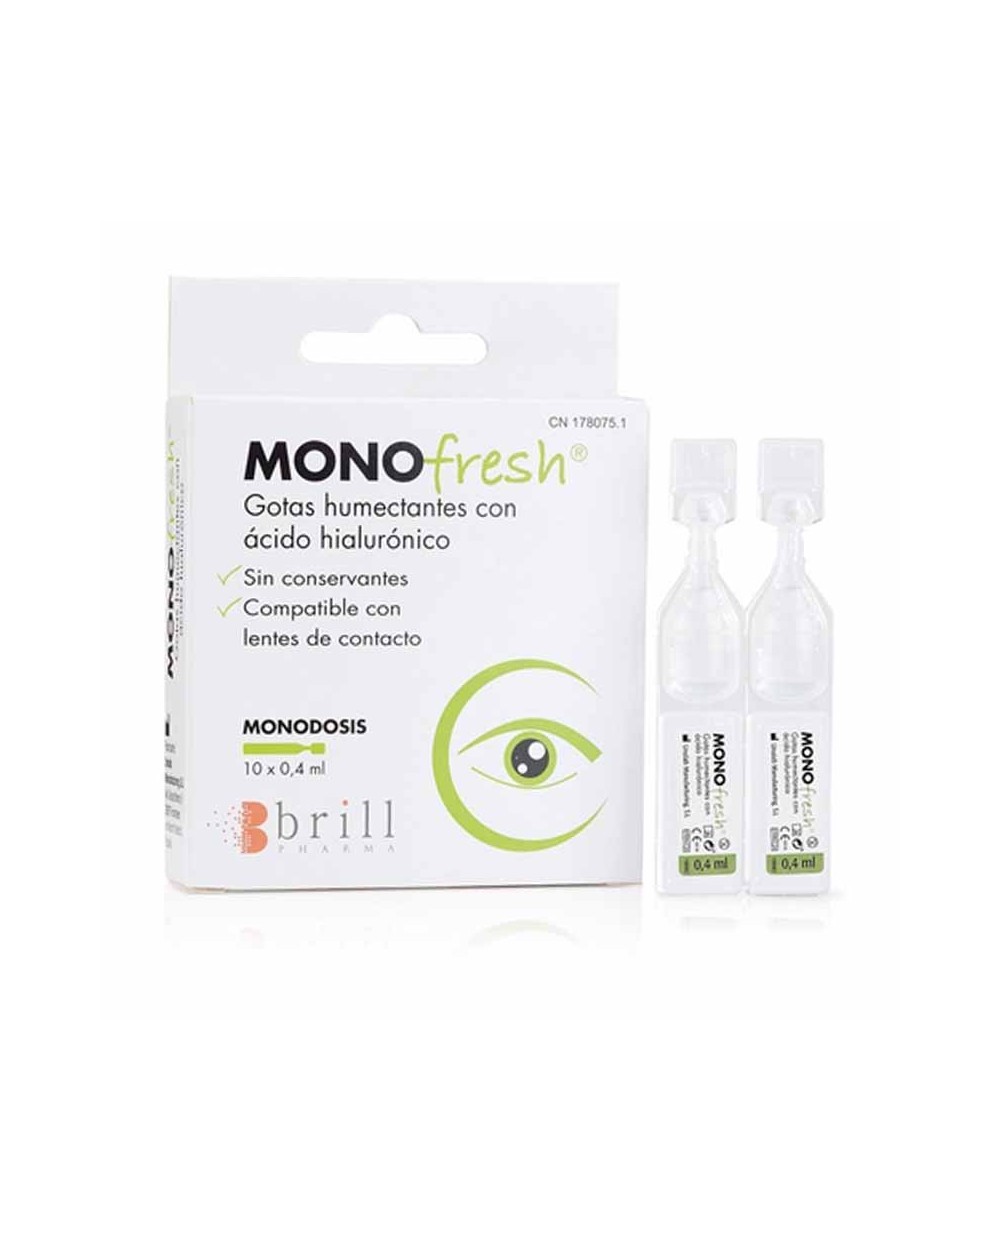 Mono Fresh gotas oculares con ácido hialurónico - Monodosis 10 x 0,4 ml.